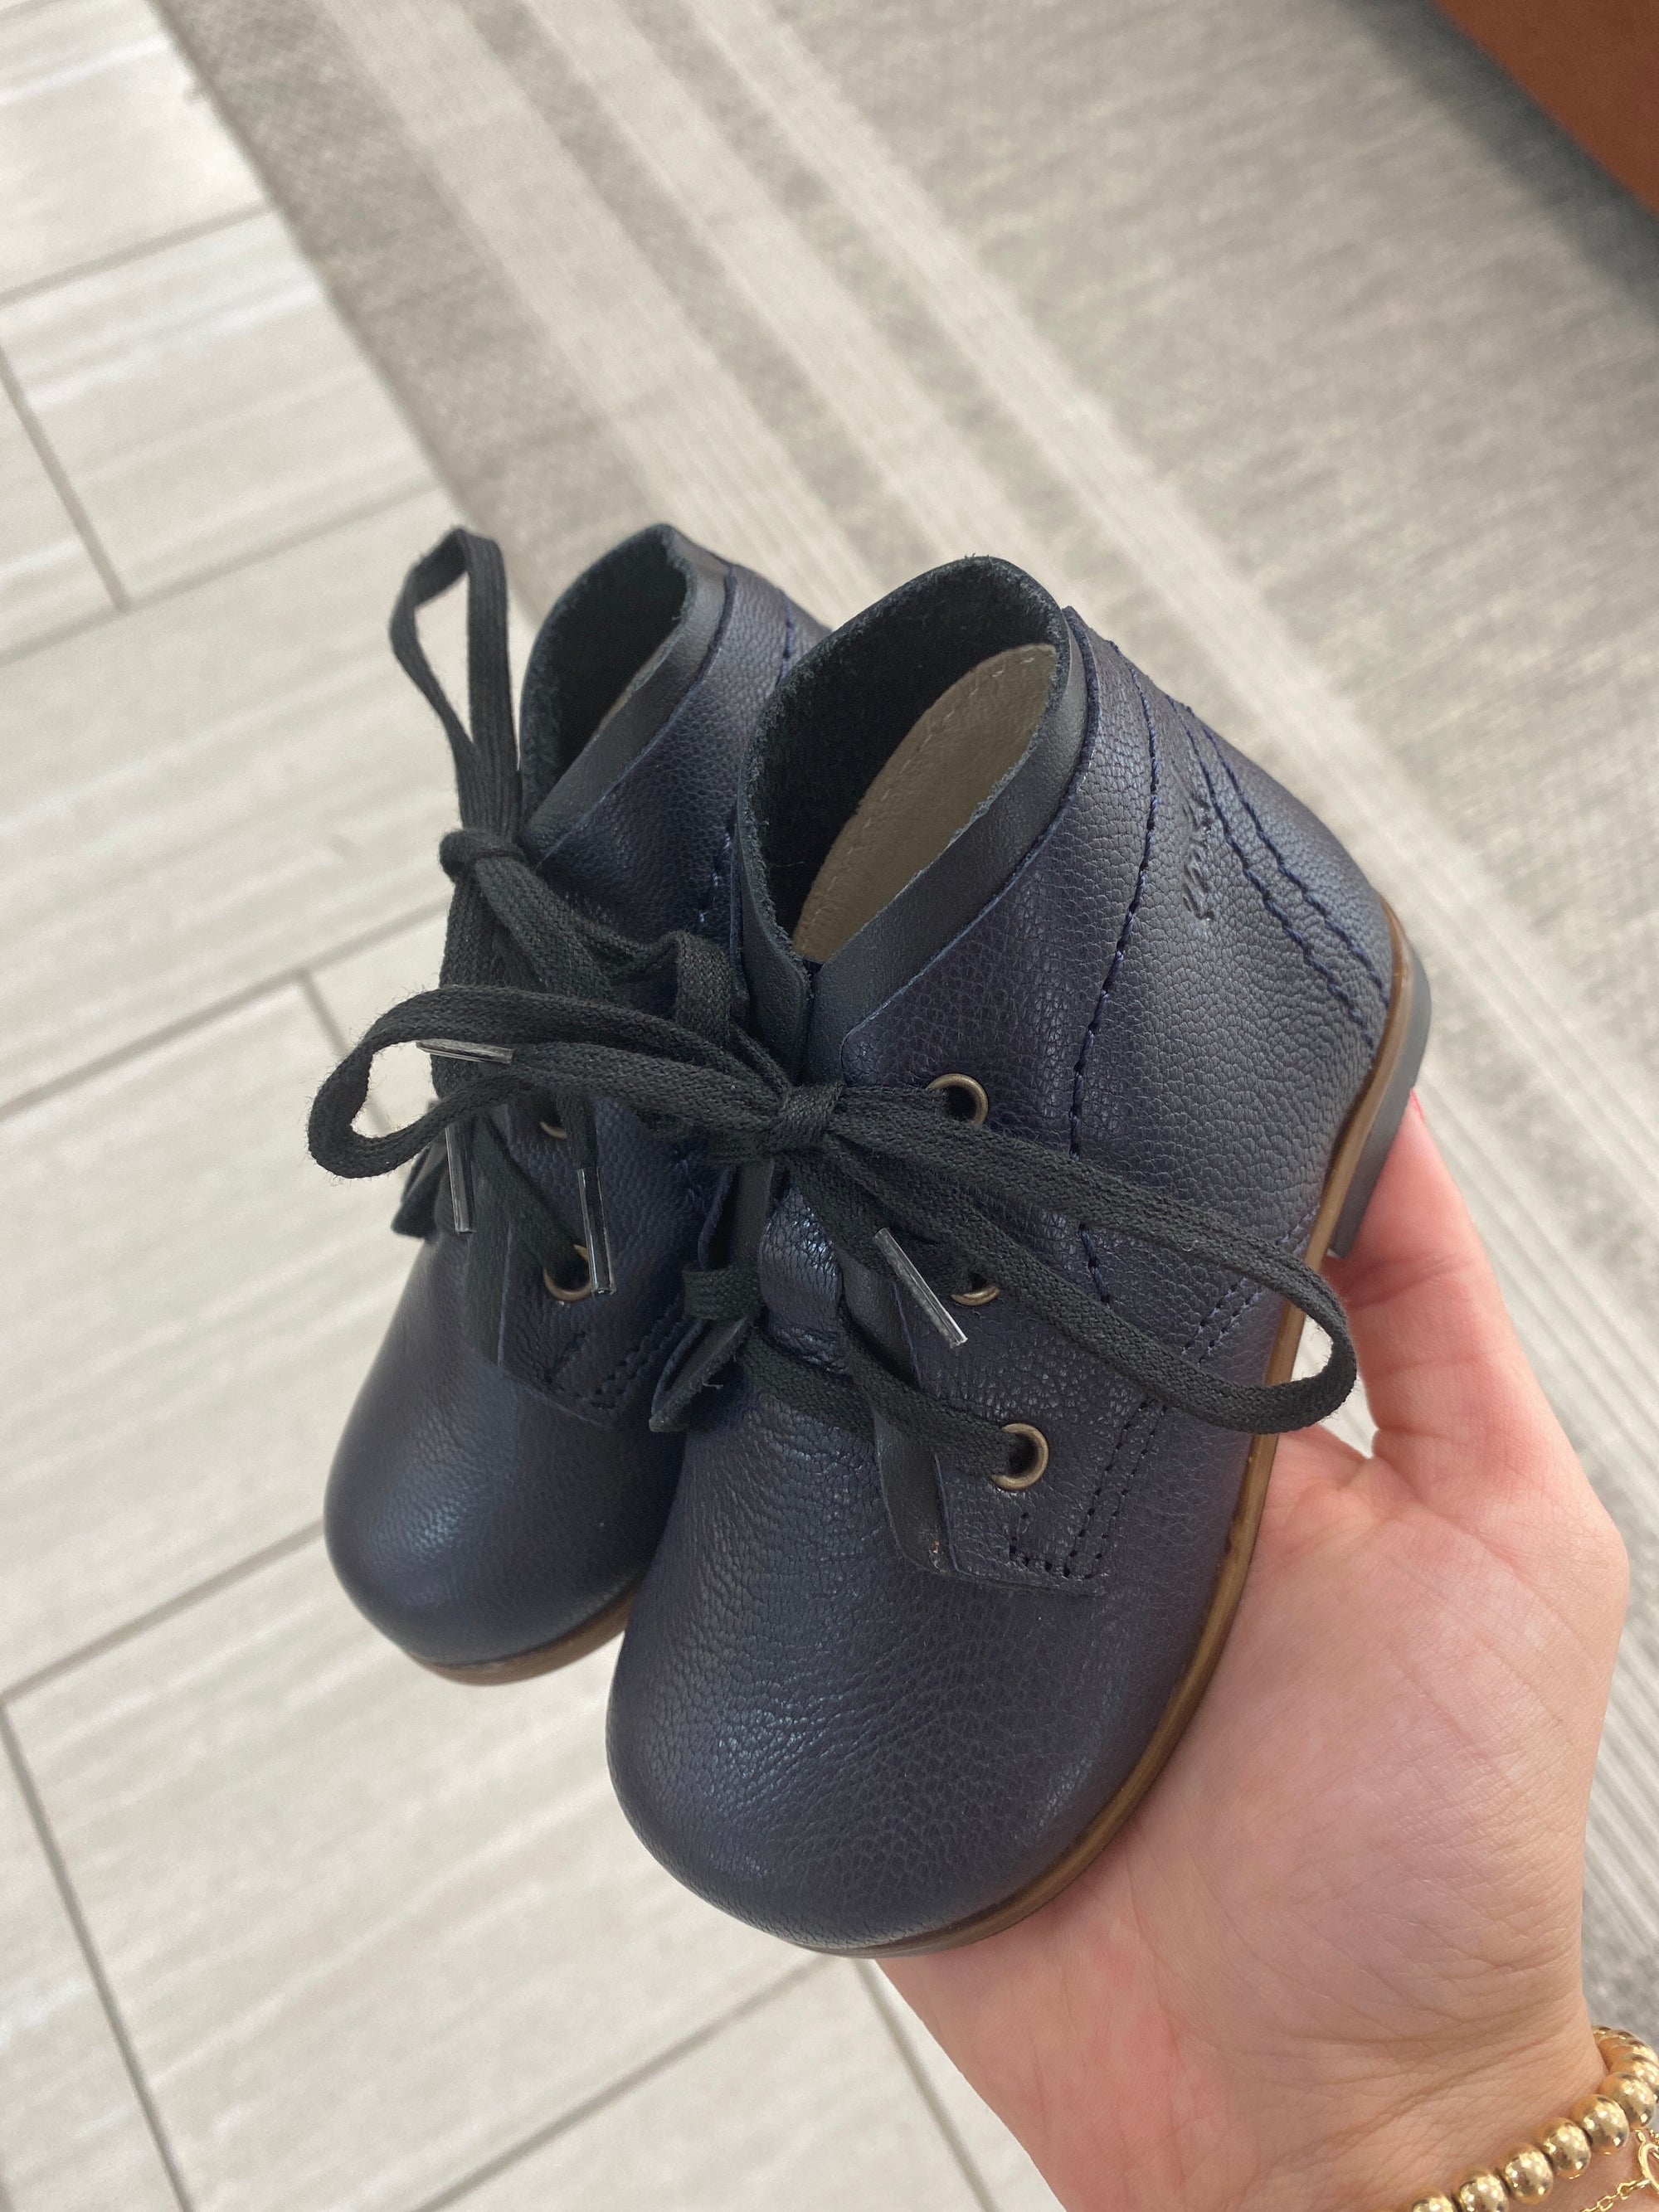 Emel Navy and Black Baby Bootie-Tassel Children Shoes